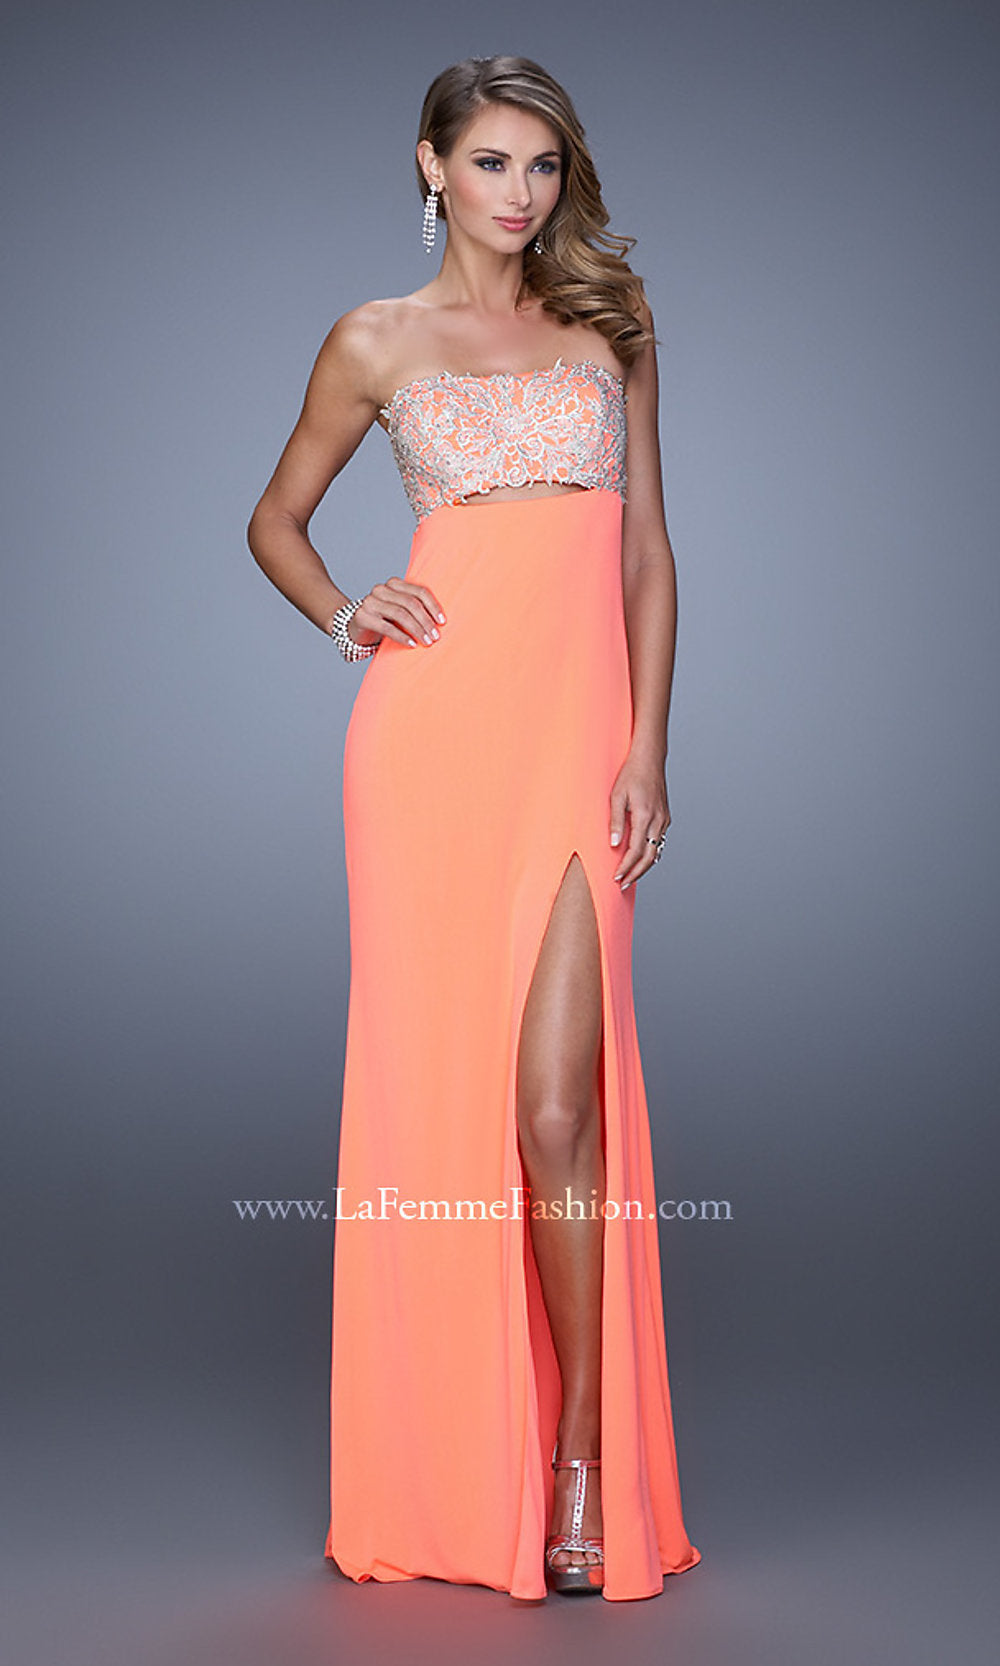 Neon Grapefruit Backless Long Strapless Prom Dress by La Femme